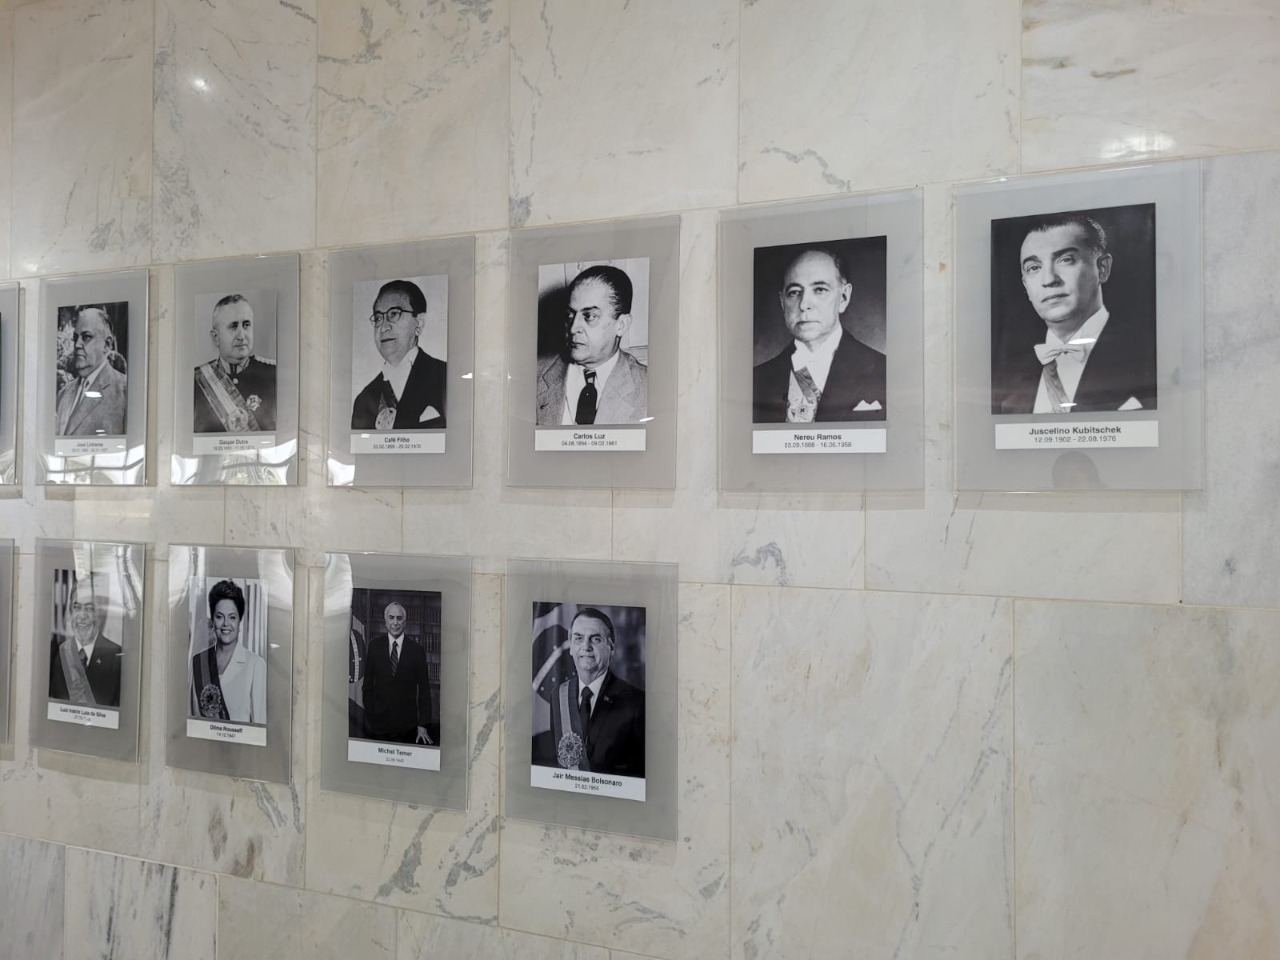 Galeria dos presidentes no Planalto ainda aguarda foto de Lula